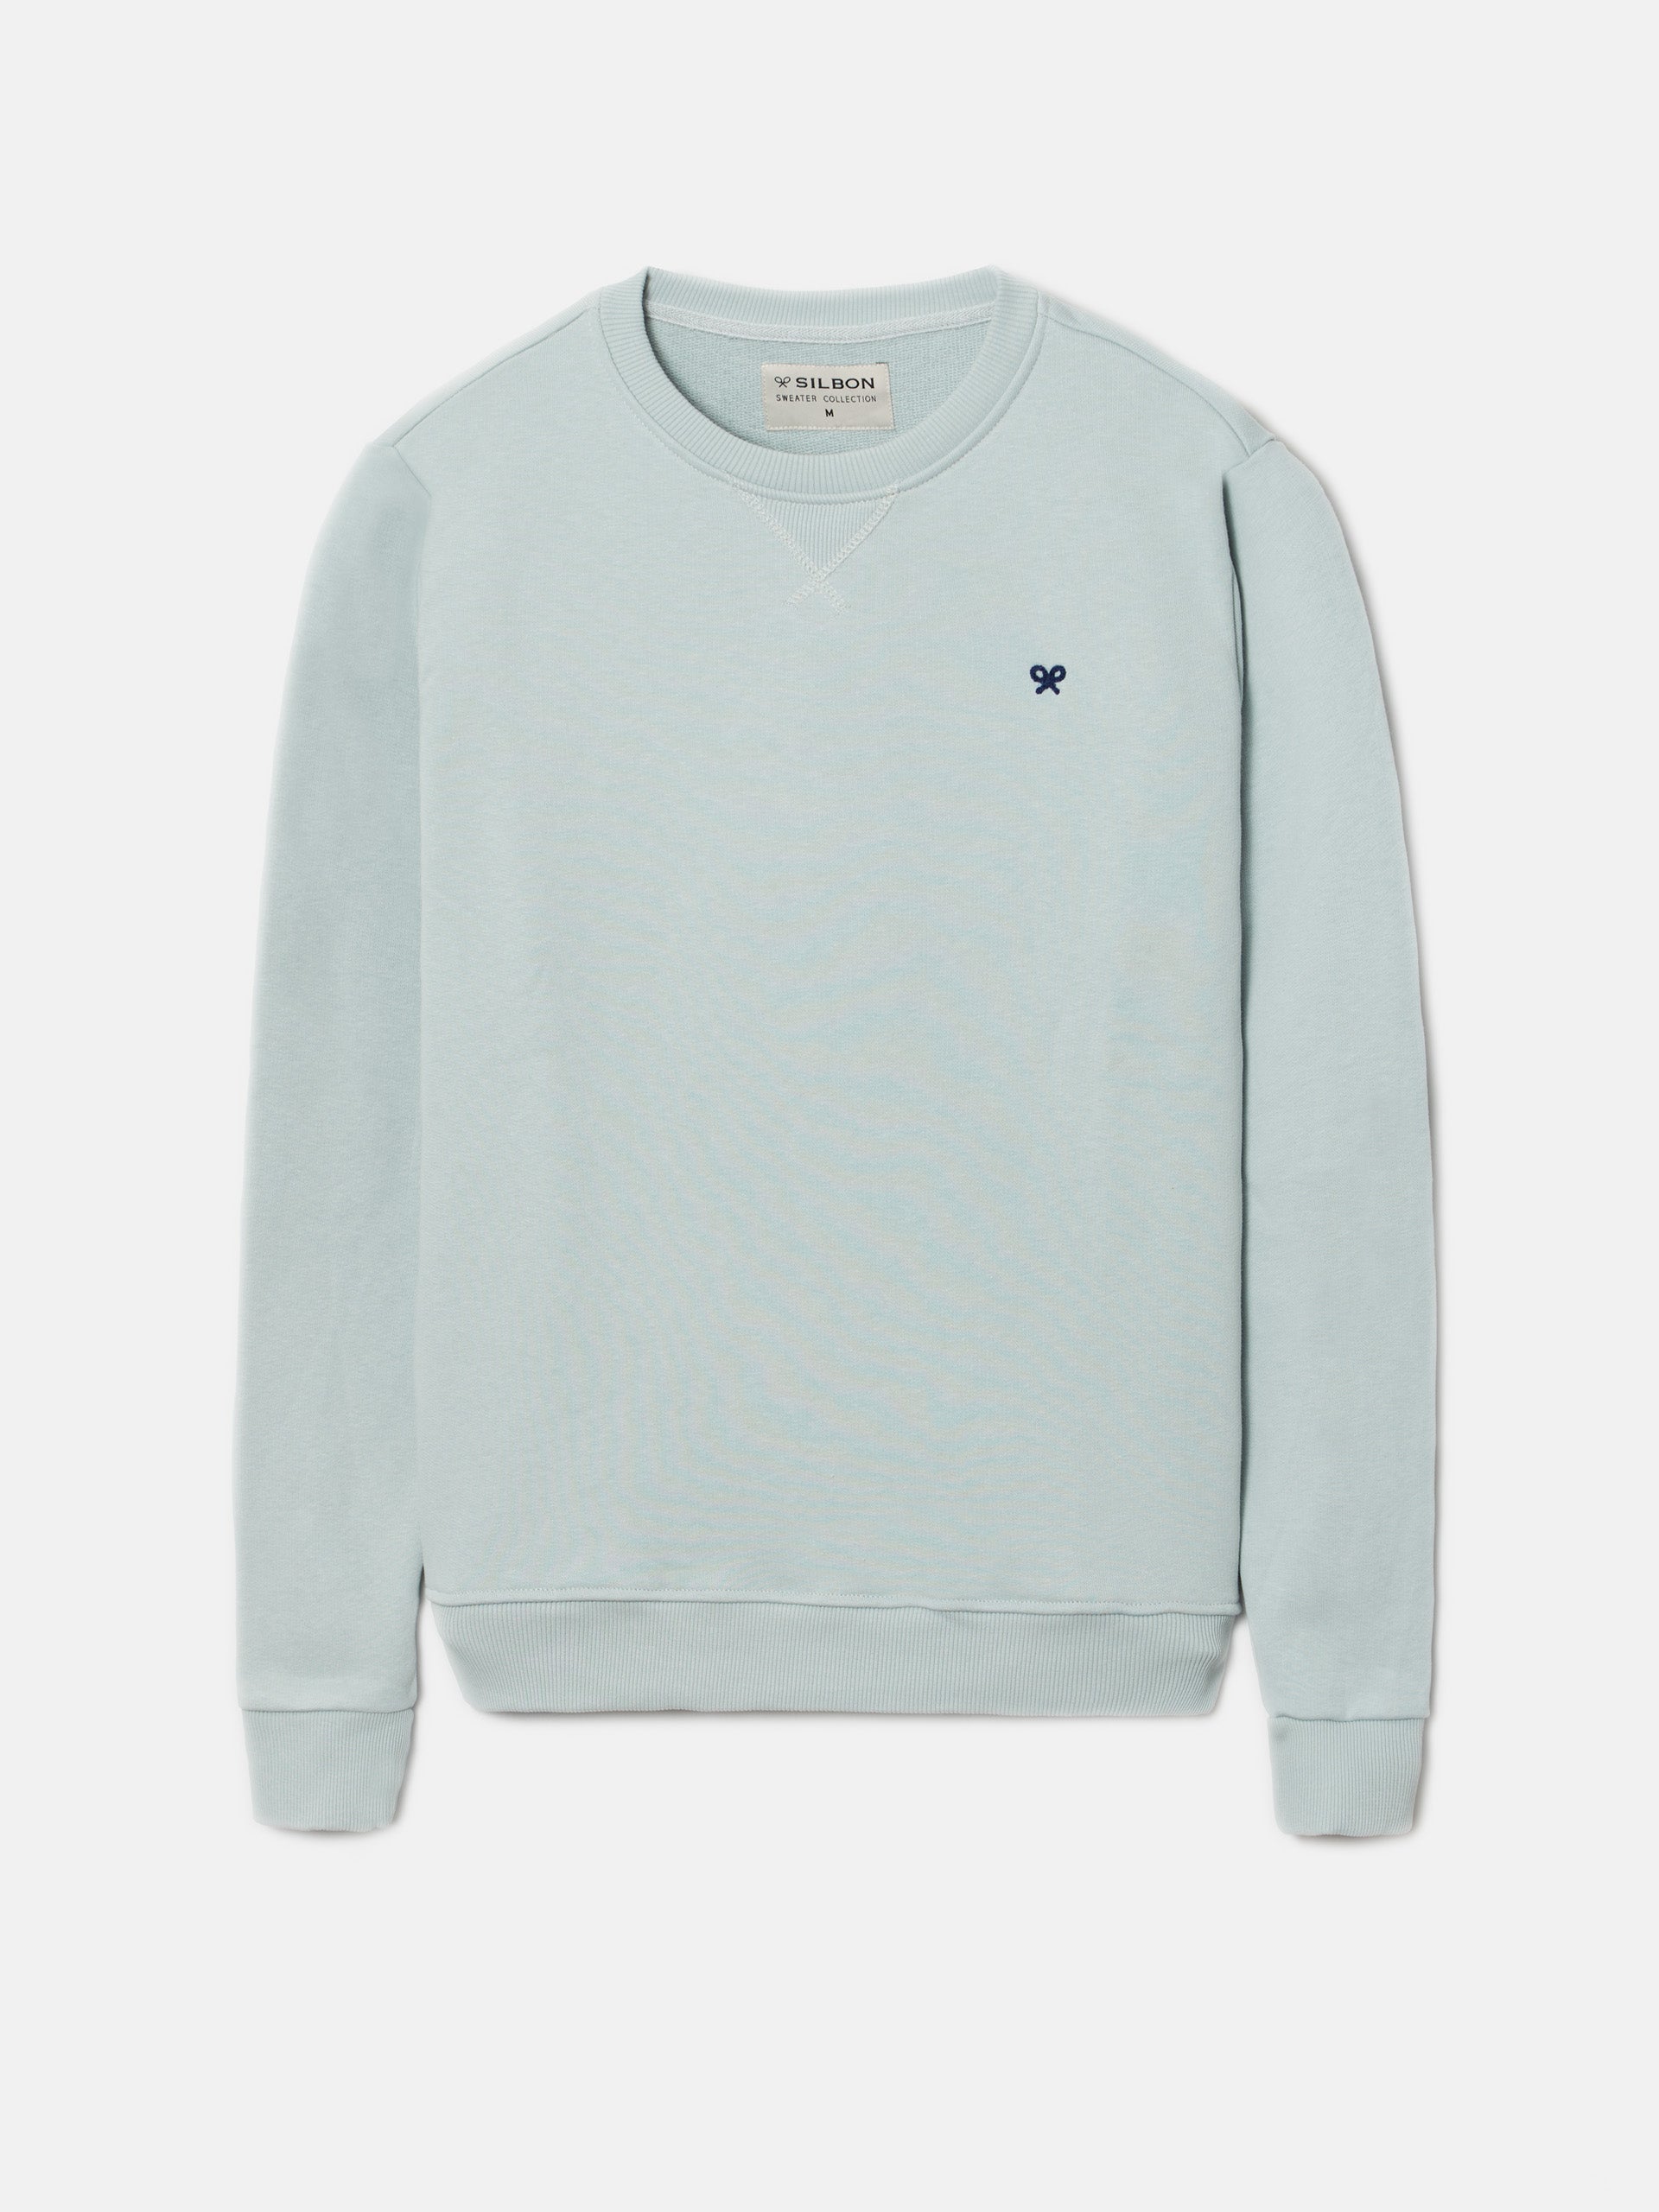 Silbon club aquamarine sweatshirt